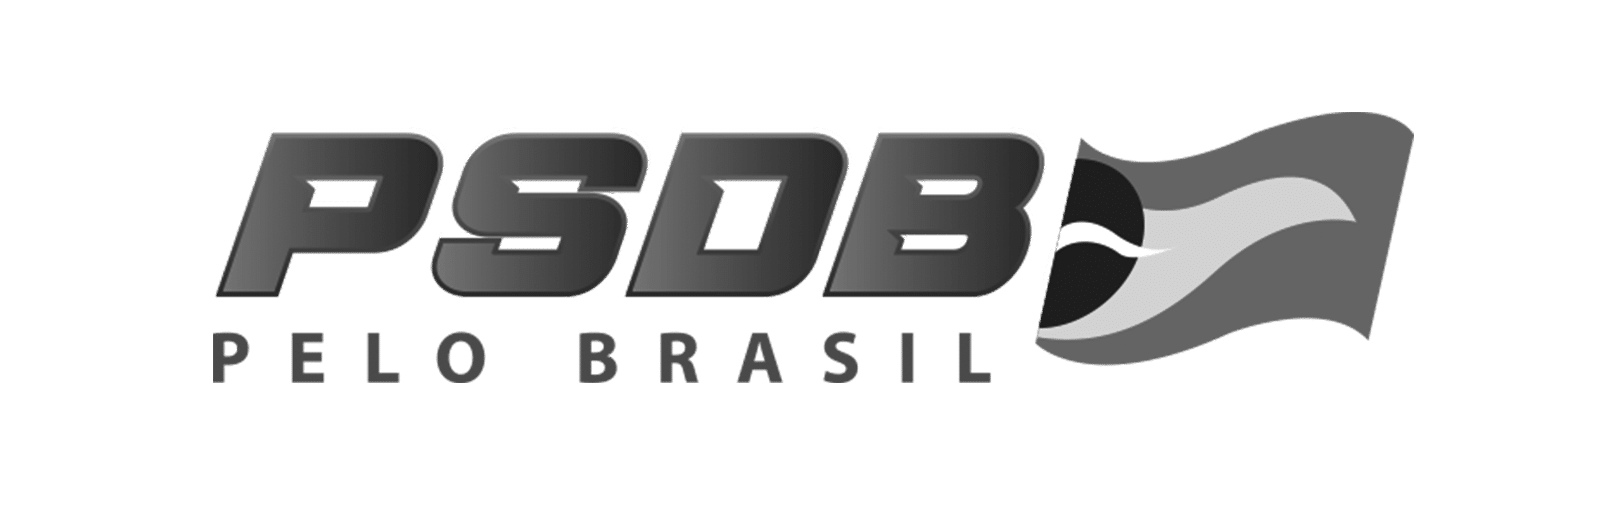 PSDB